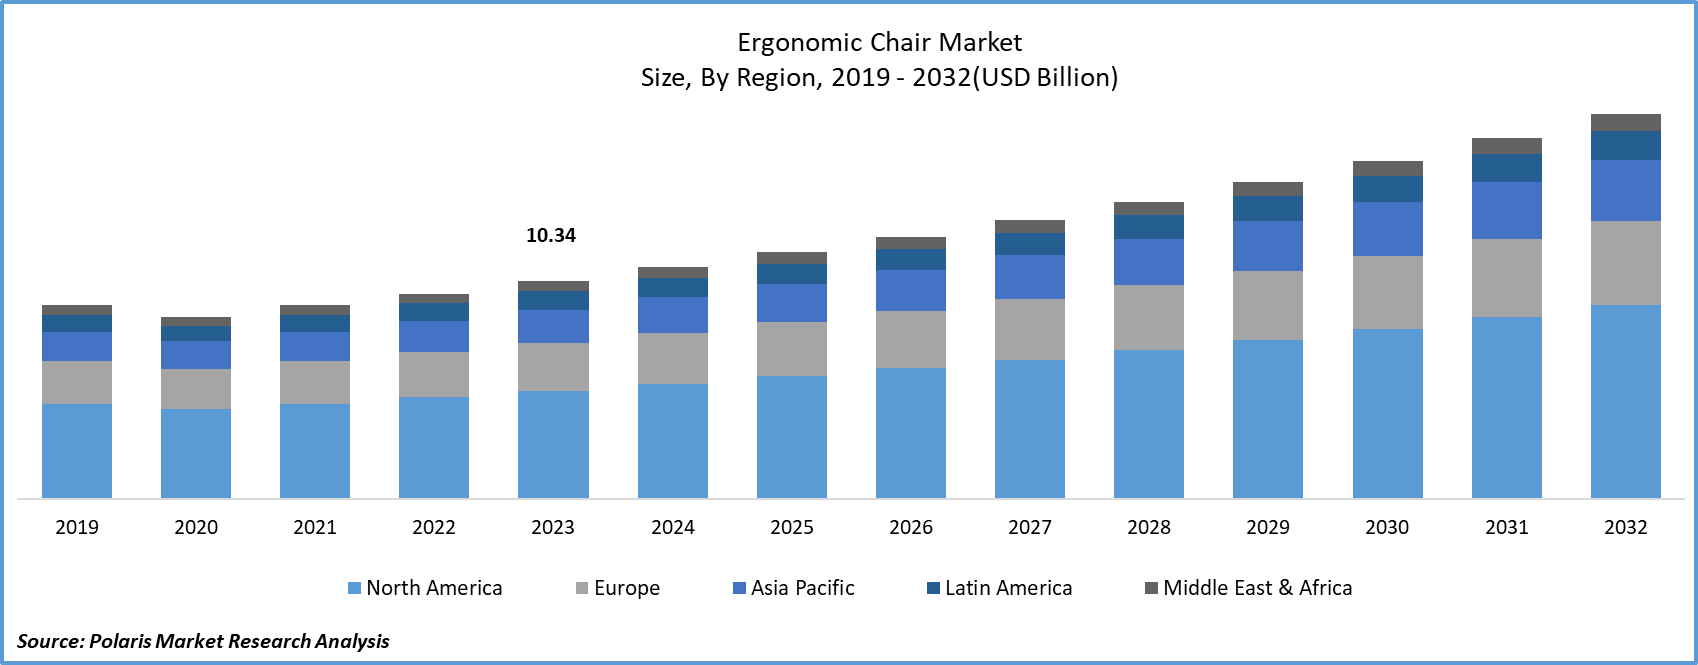 Ergonomic Chair Market Size